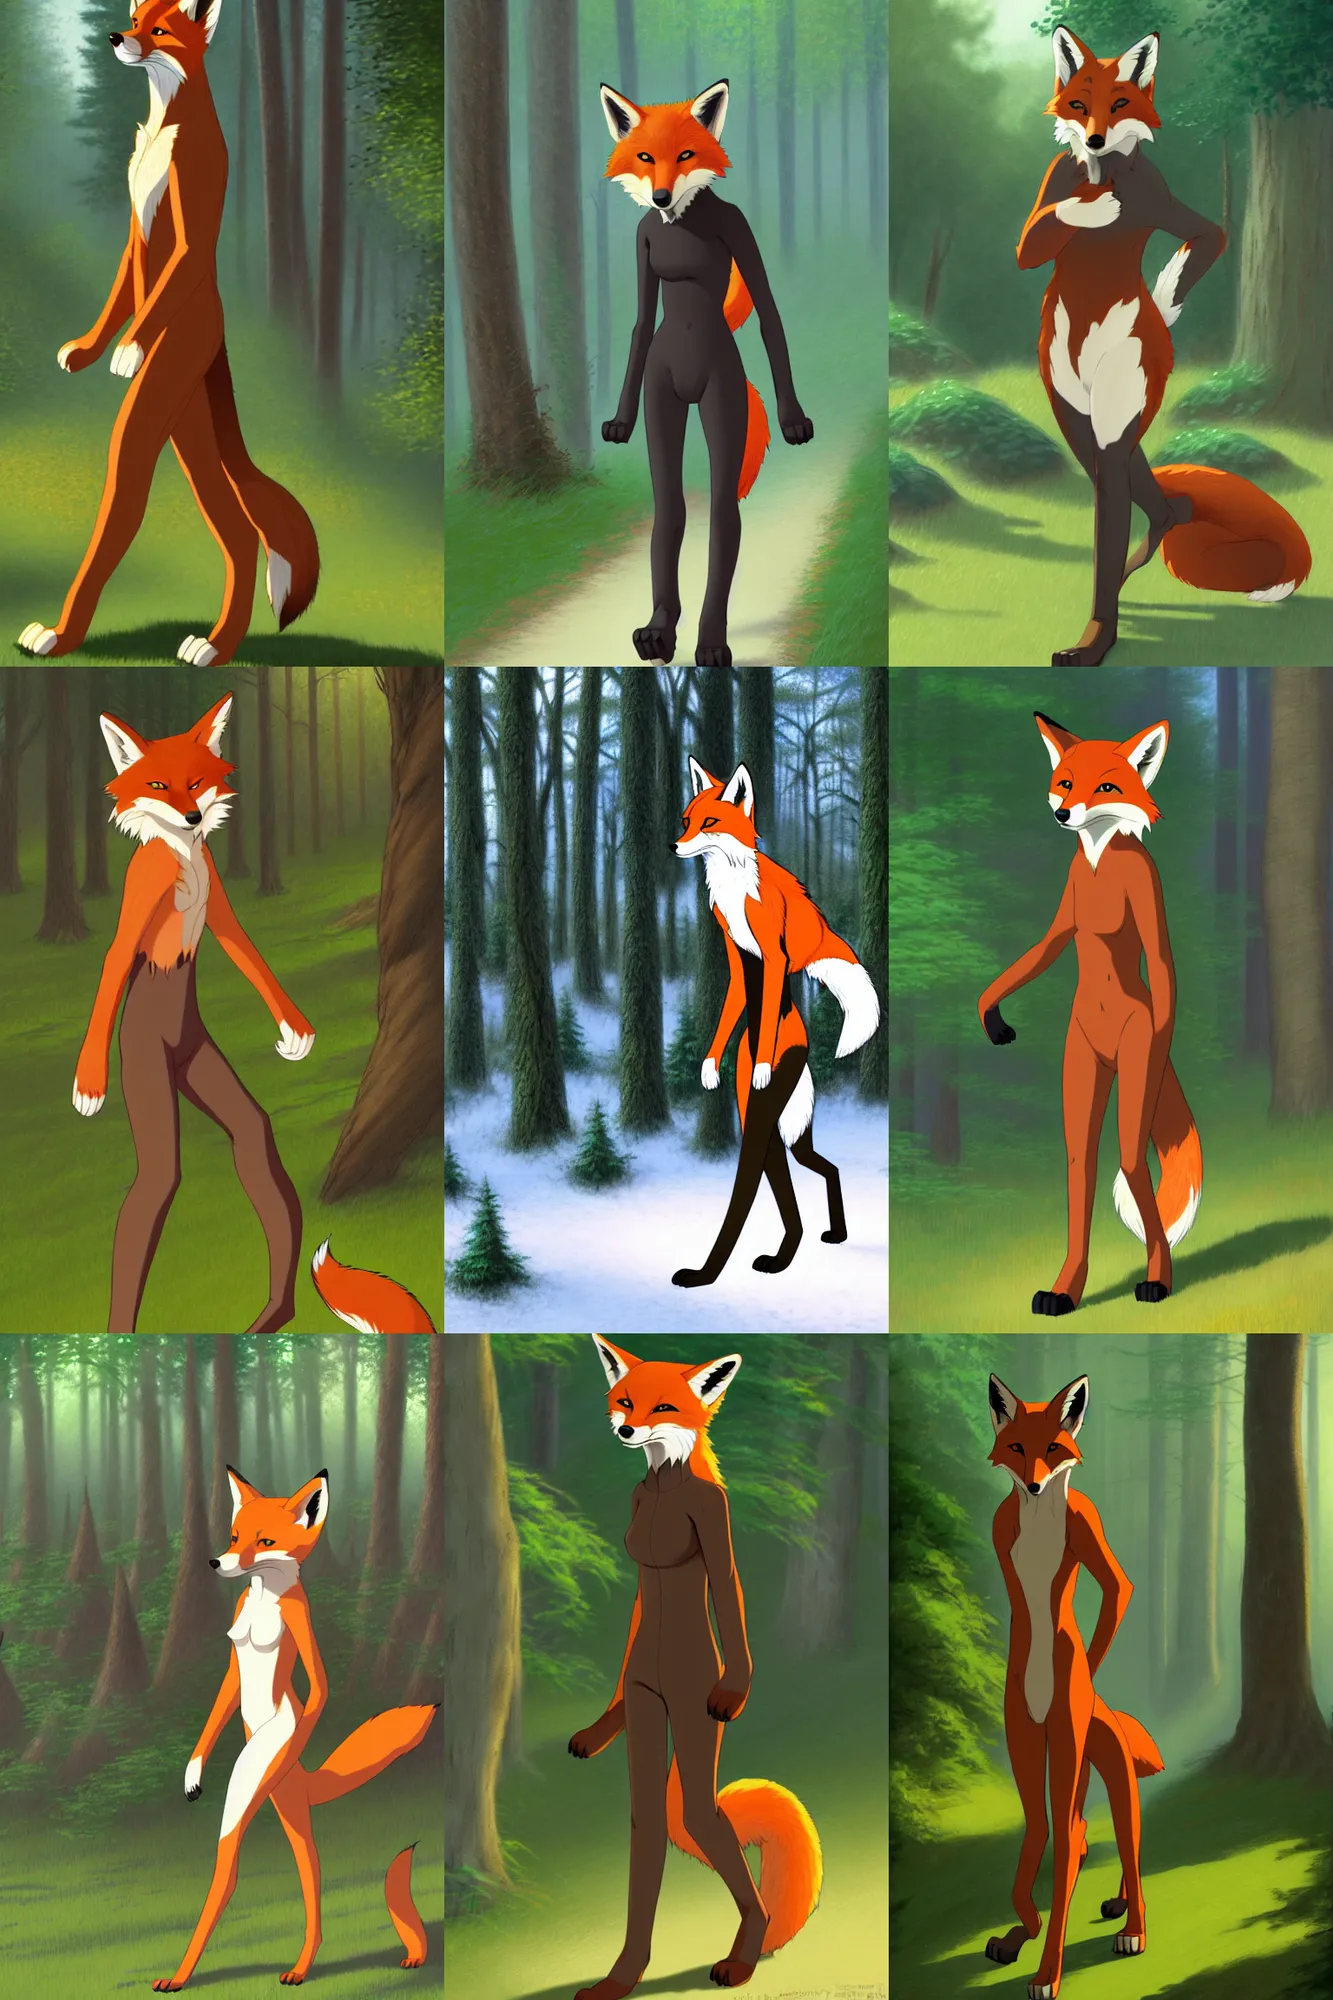 Prompt: anthro digitigrade natural - colored fox person with black paws, walking upright in a forest, hibbary, dark natasha, goldenwolf, thomas kinkade, makoto shinkai